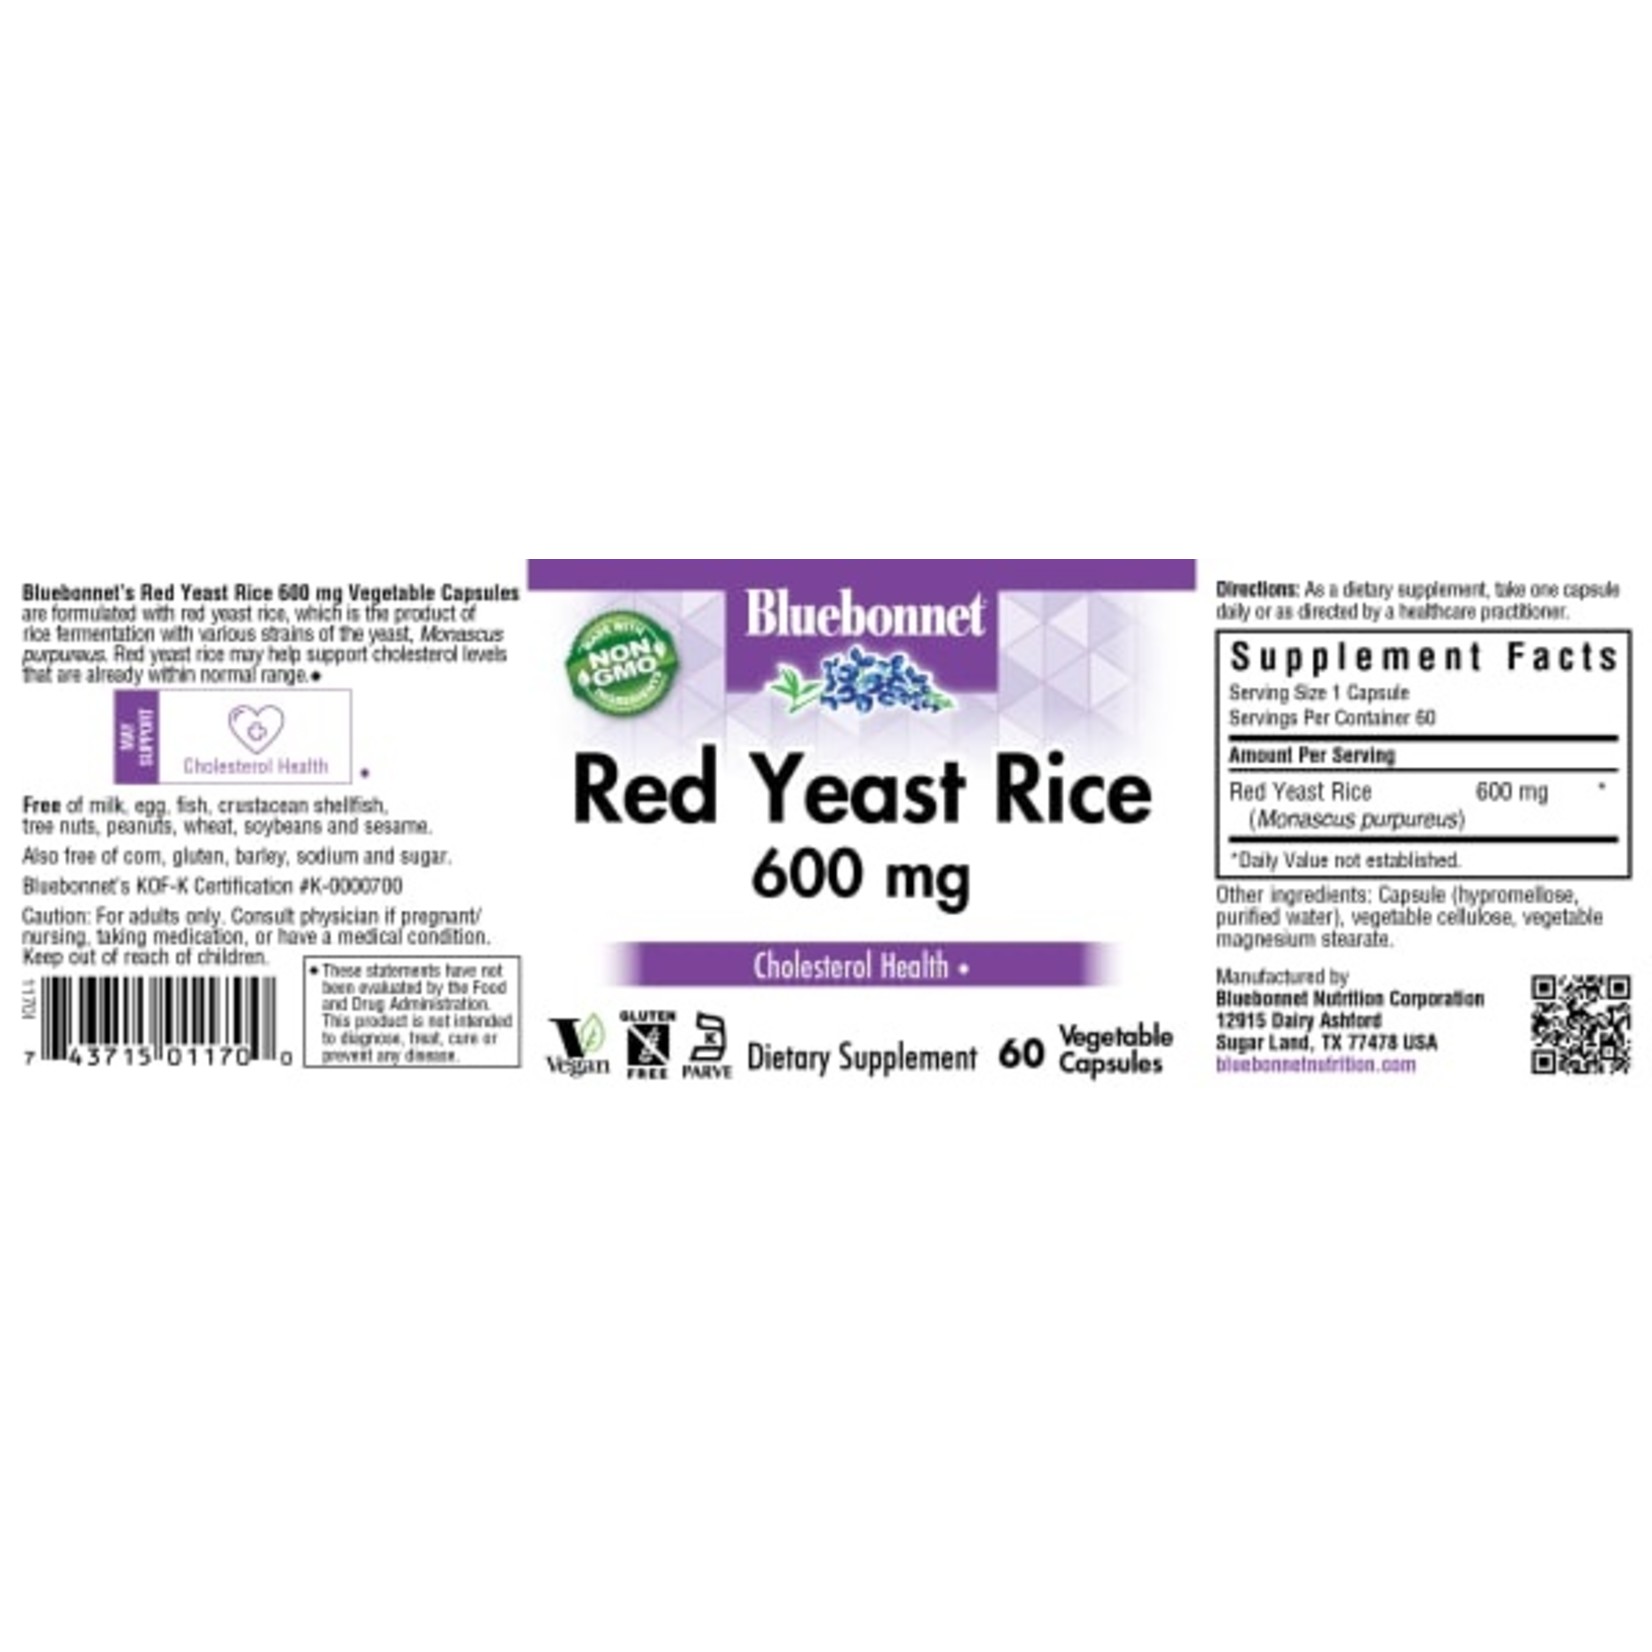 Bluebonnet Bluebonnet - Red Yeast Rice 600 mg - 60 Veg Capsules